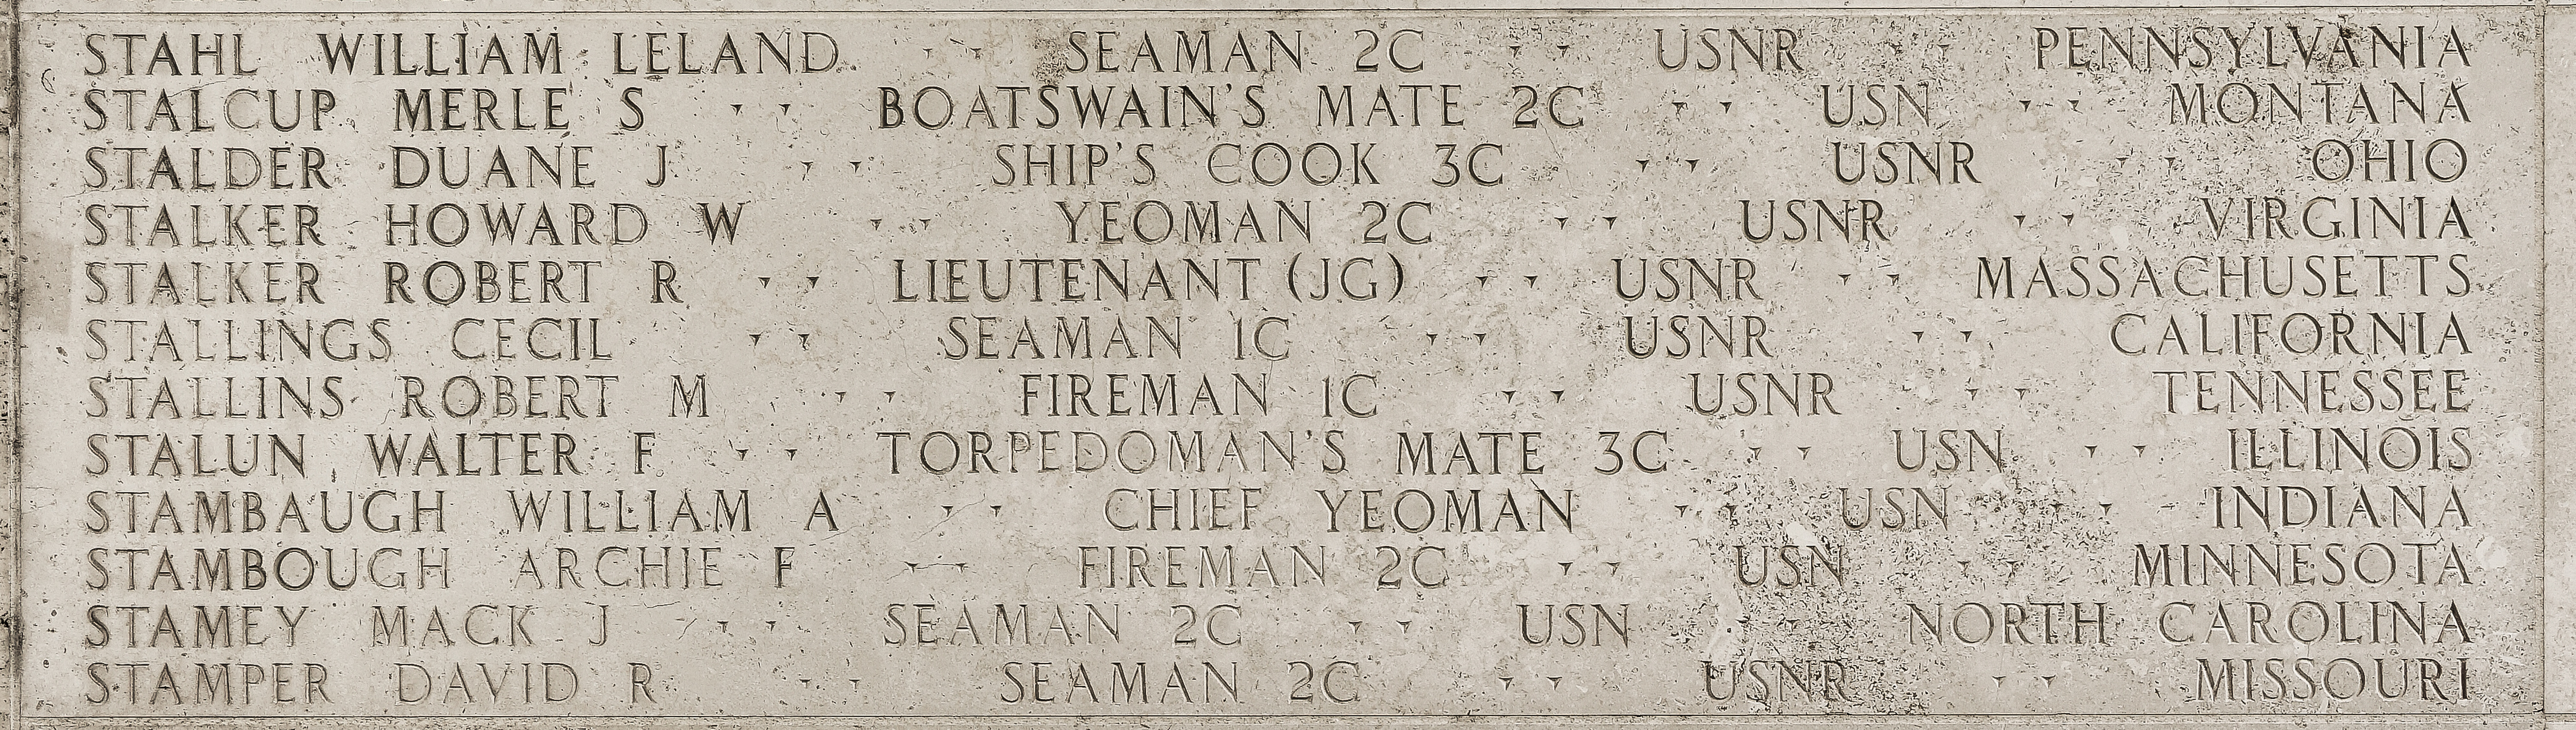 William A. Stambaugh, Chief Yeoman